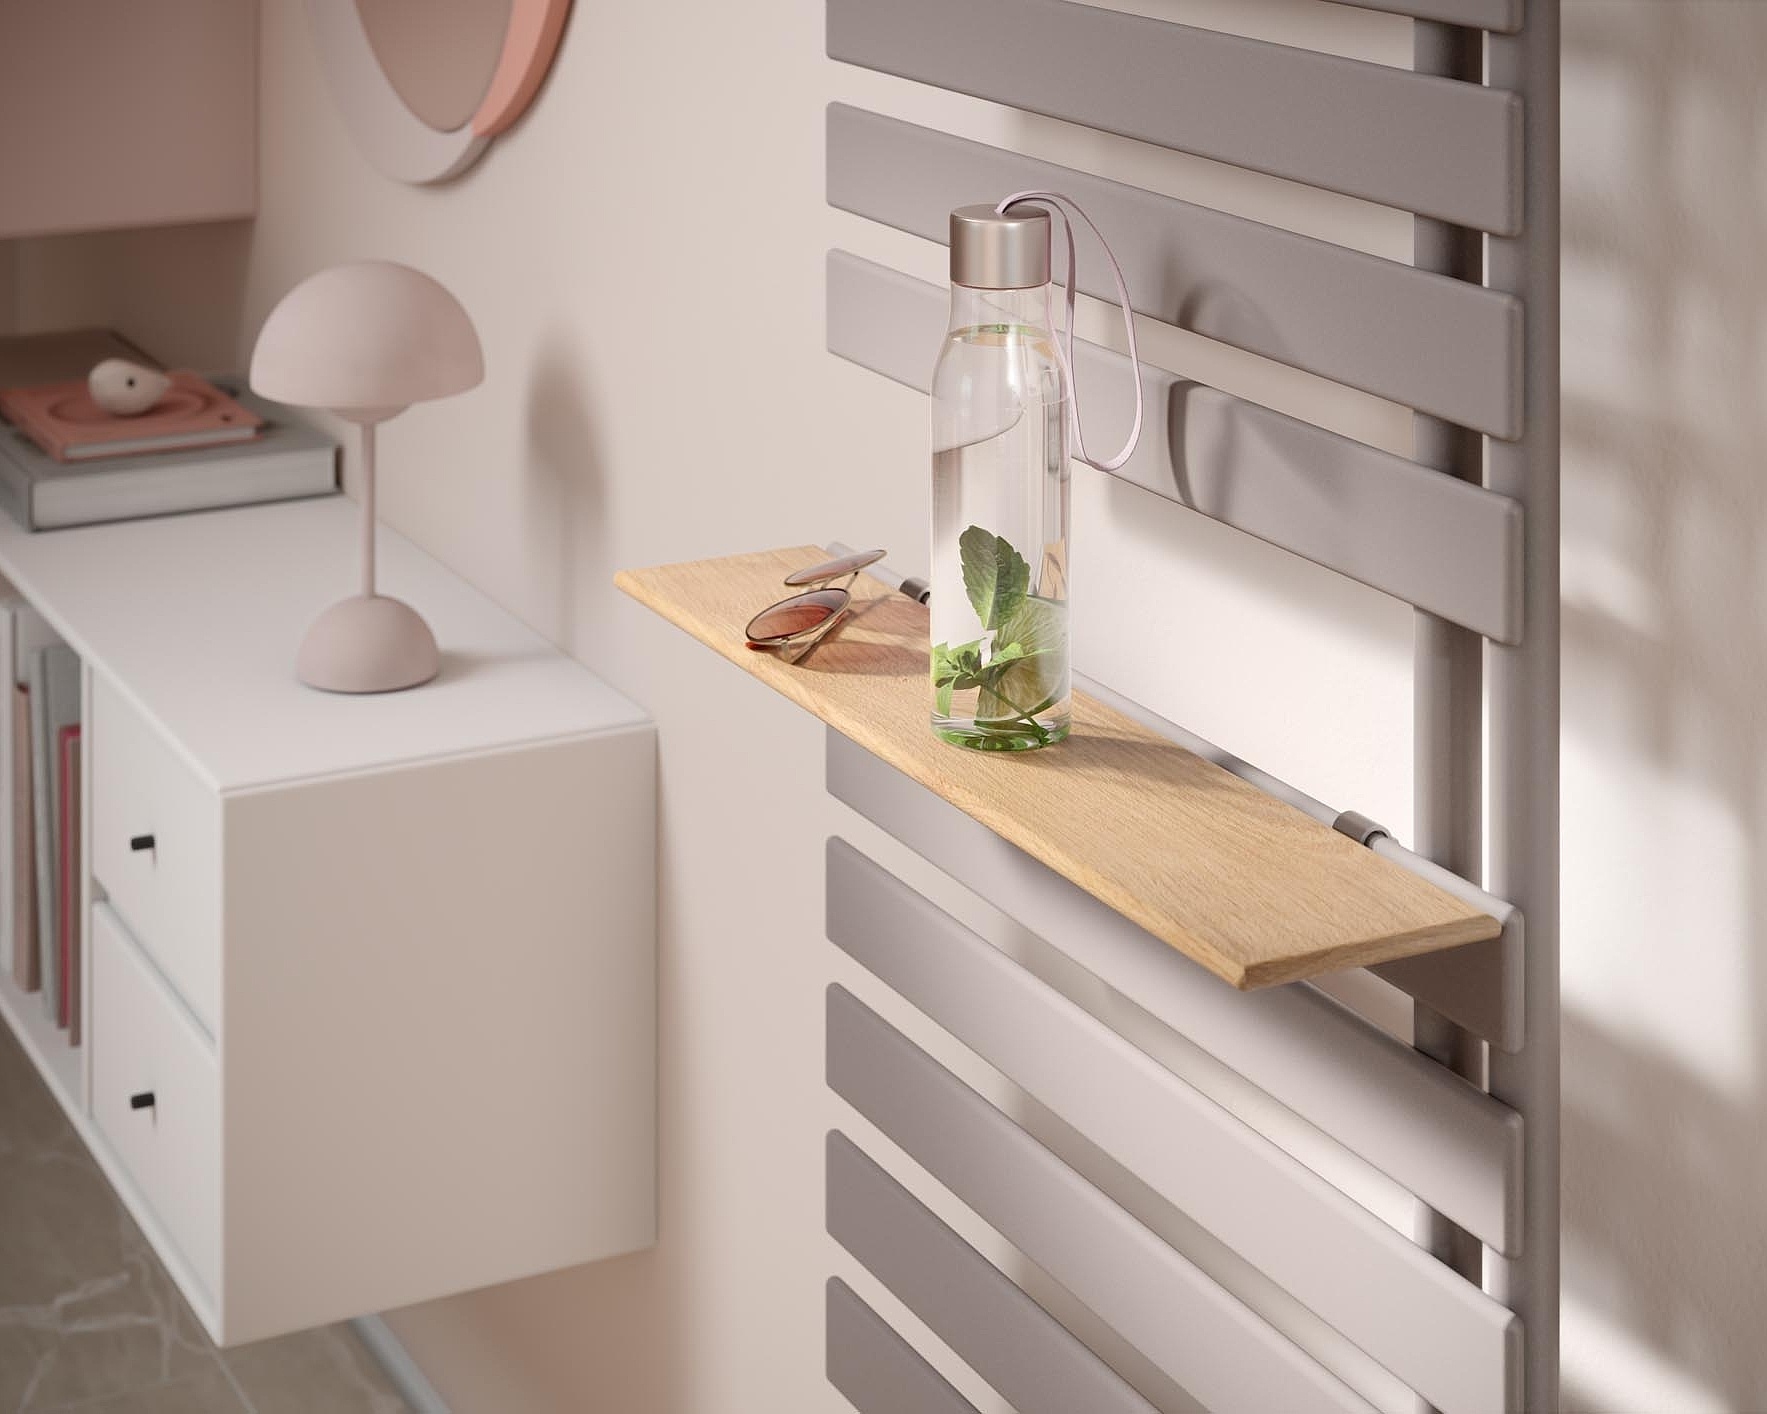 The Kermi Credo Half flat design and bathroom radiator can be stylishly customised.